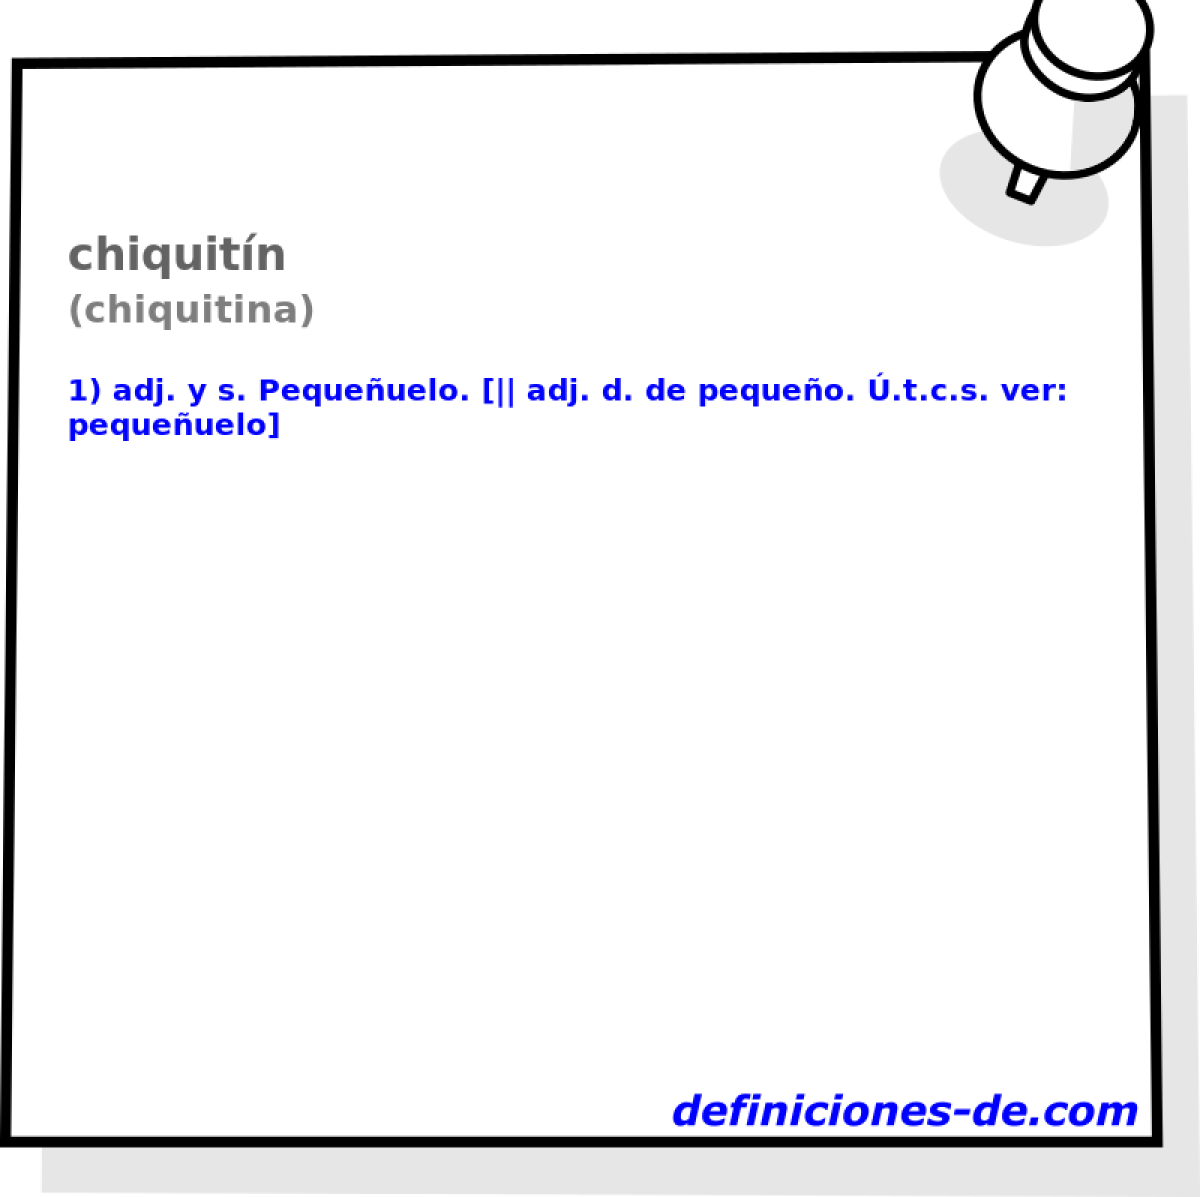 chiquitn (chiquitina)